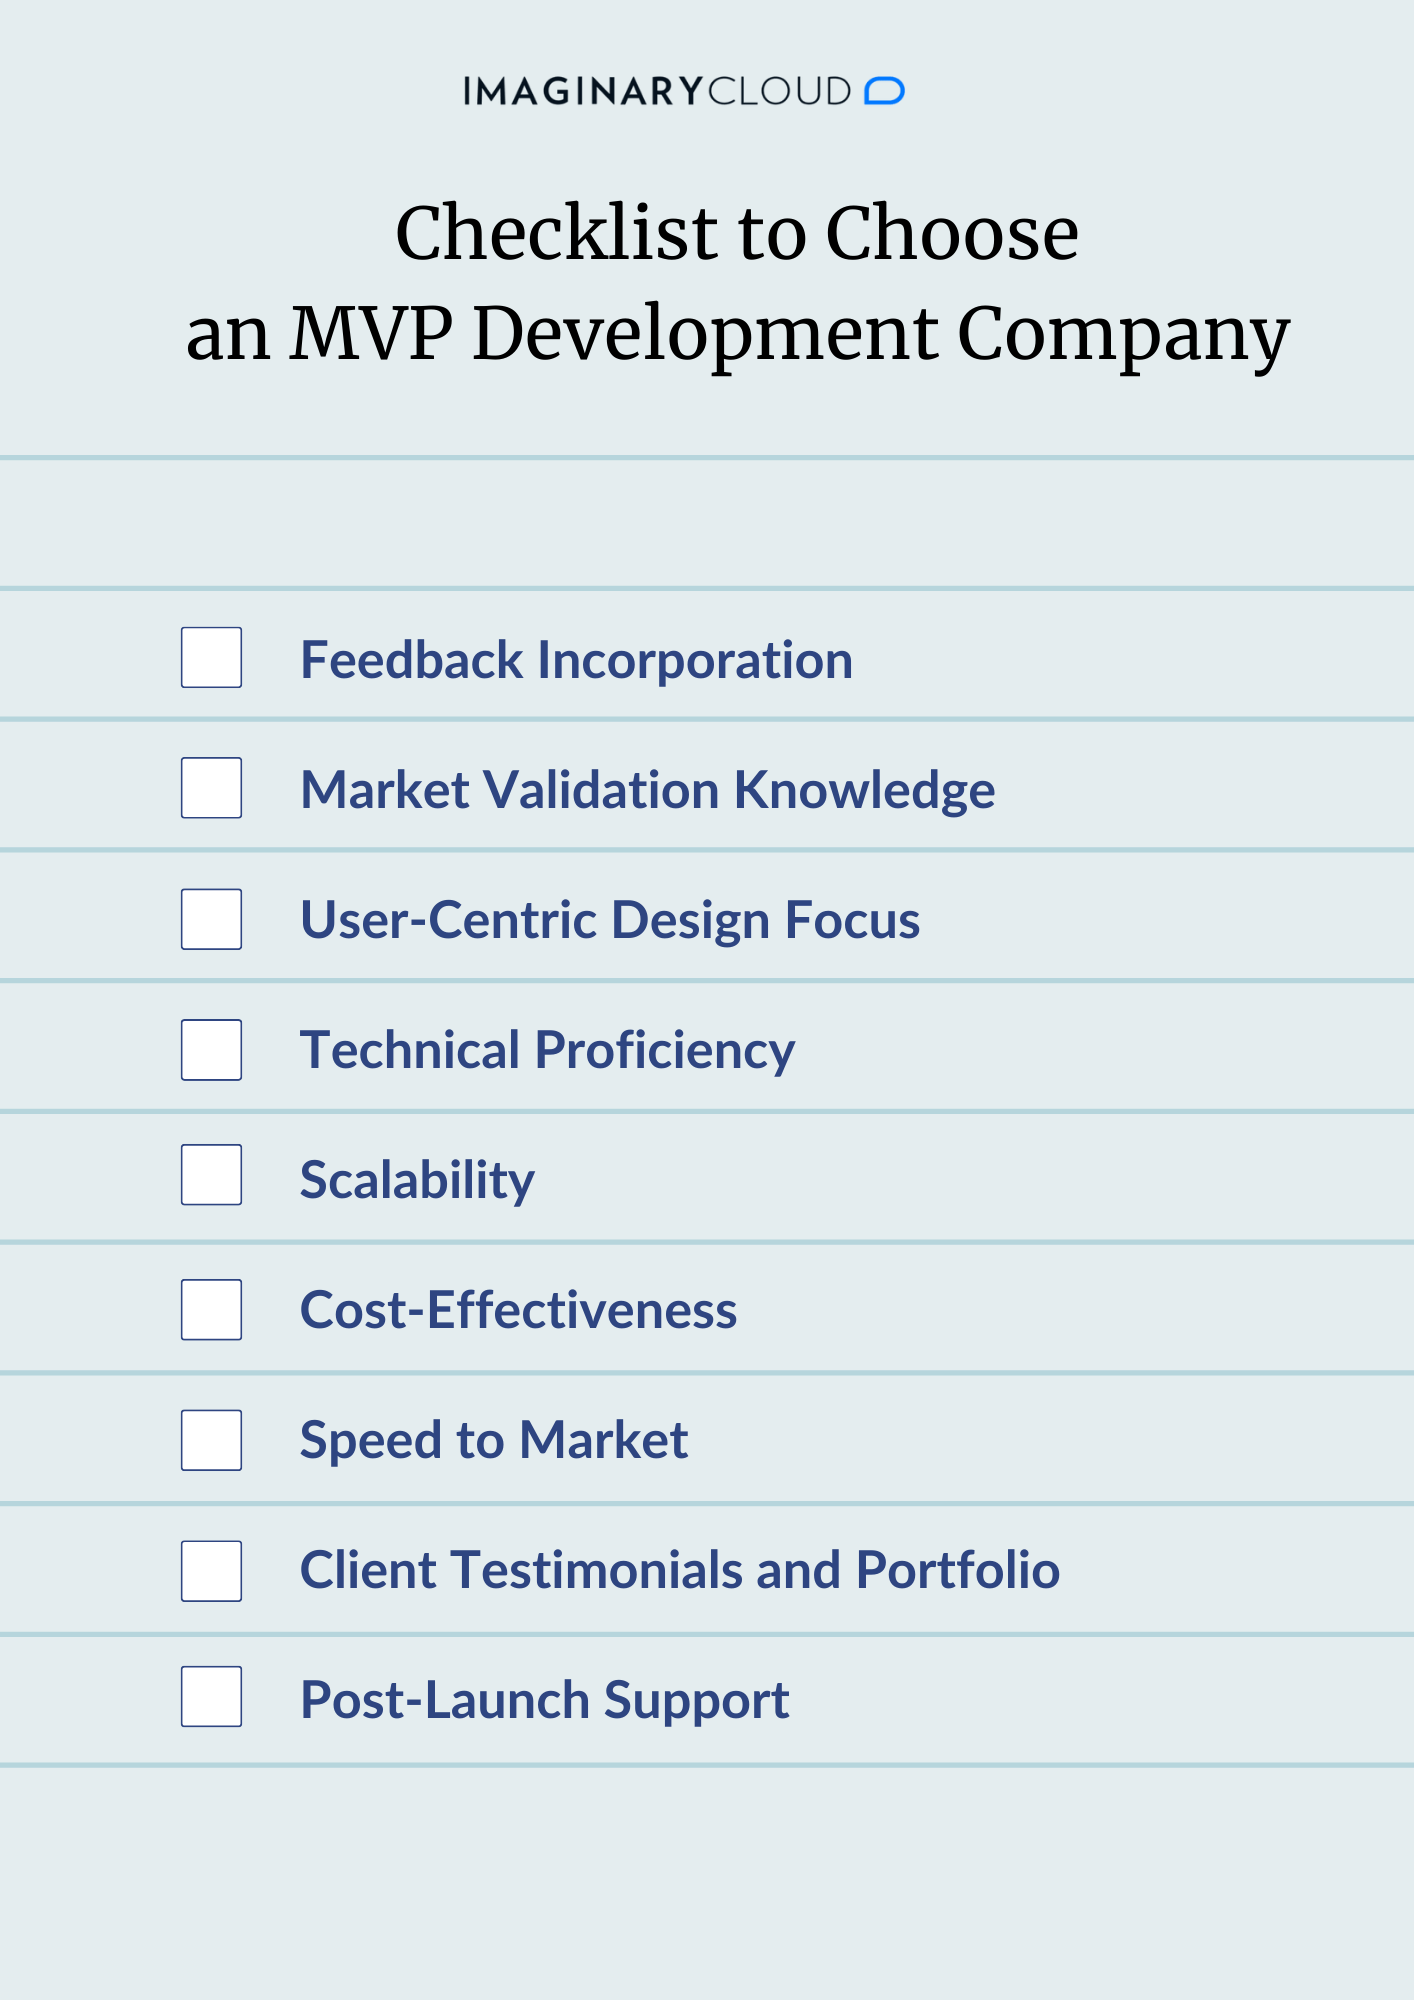 Checklist to Choose an MVP Development Company